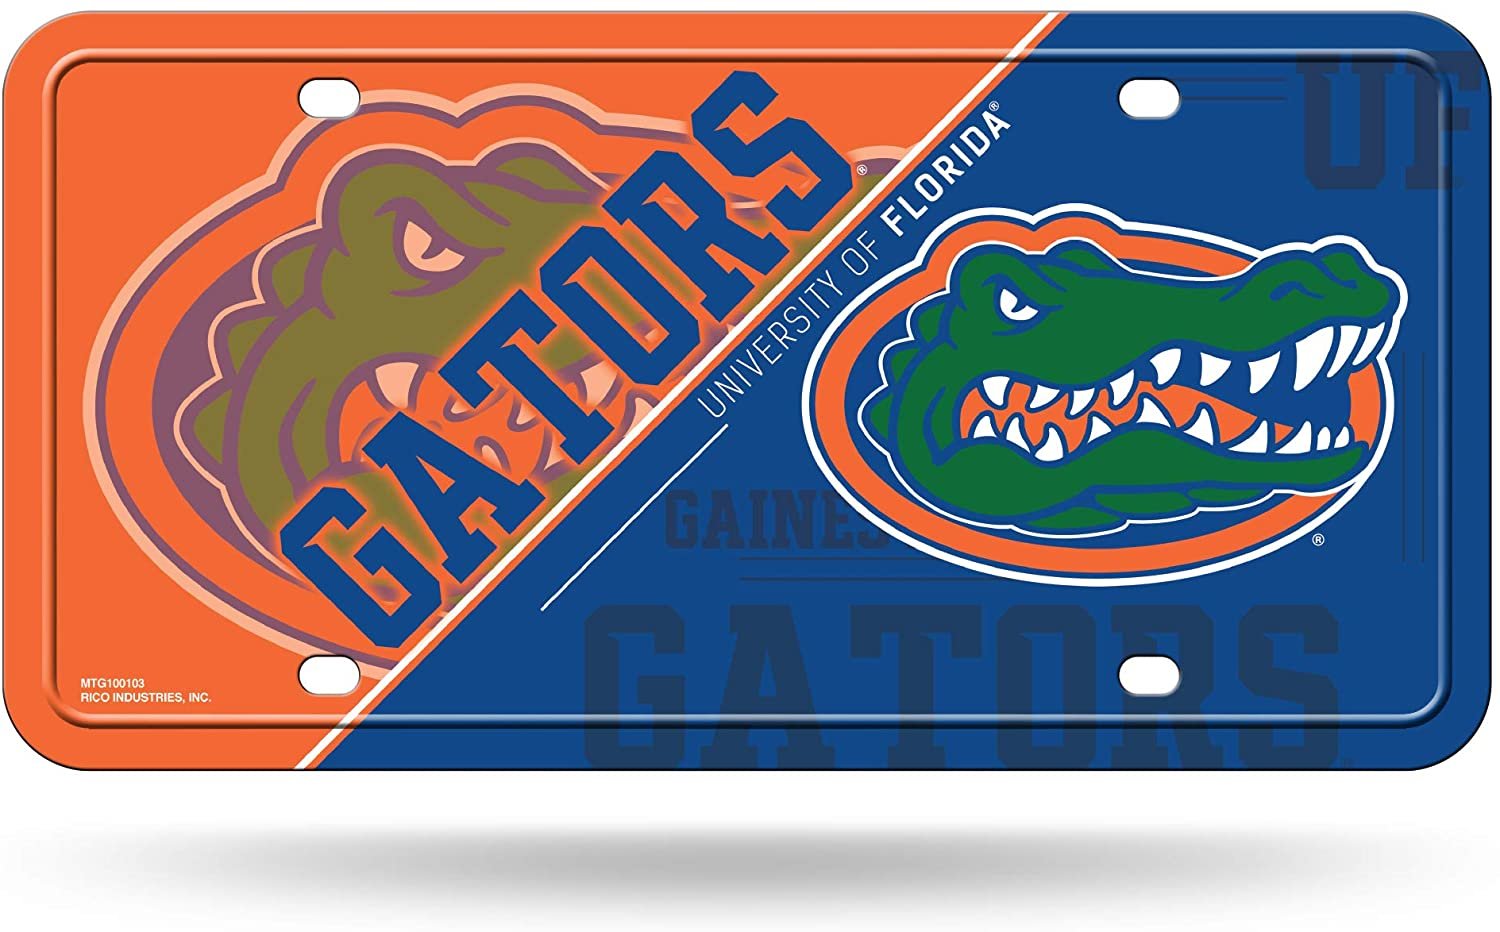 University of Florida Gators Metal Tag License Plate Novelty 6x12 Inch Split Design